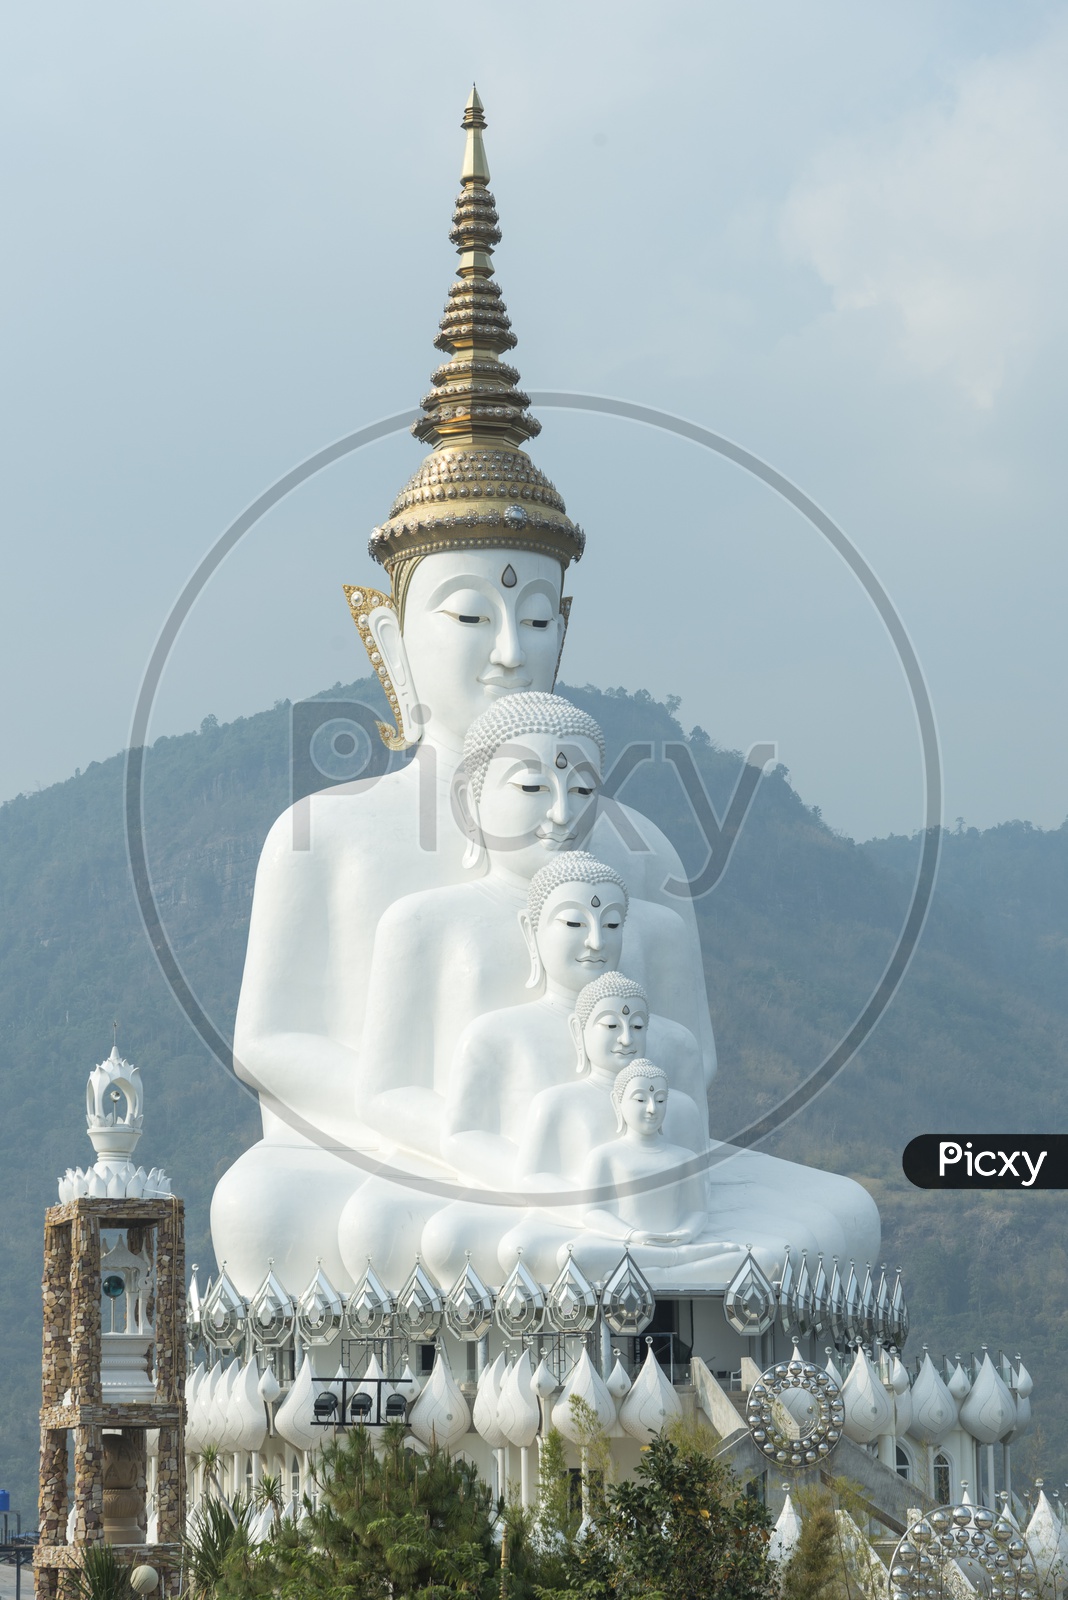 Five Buddha statue in Wat Pha Sorn Kaew temple, Thailand